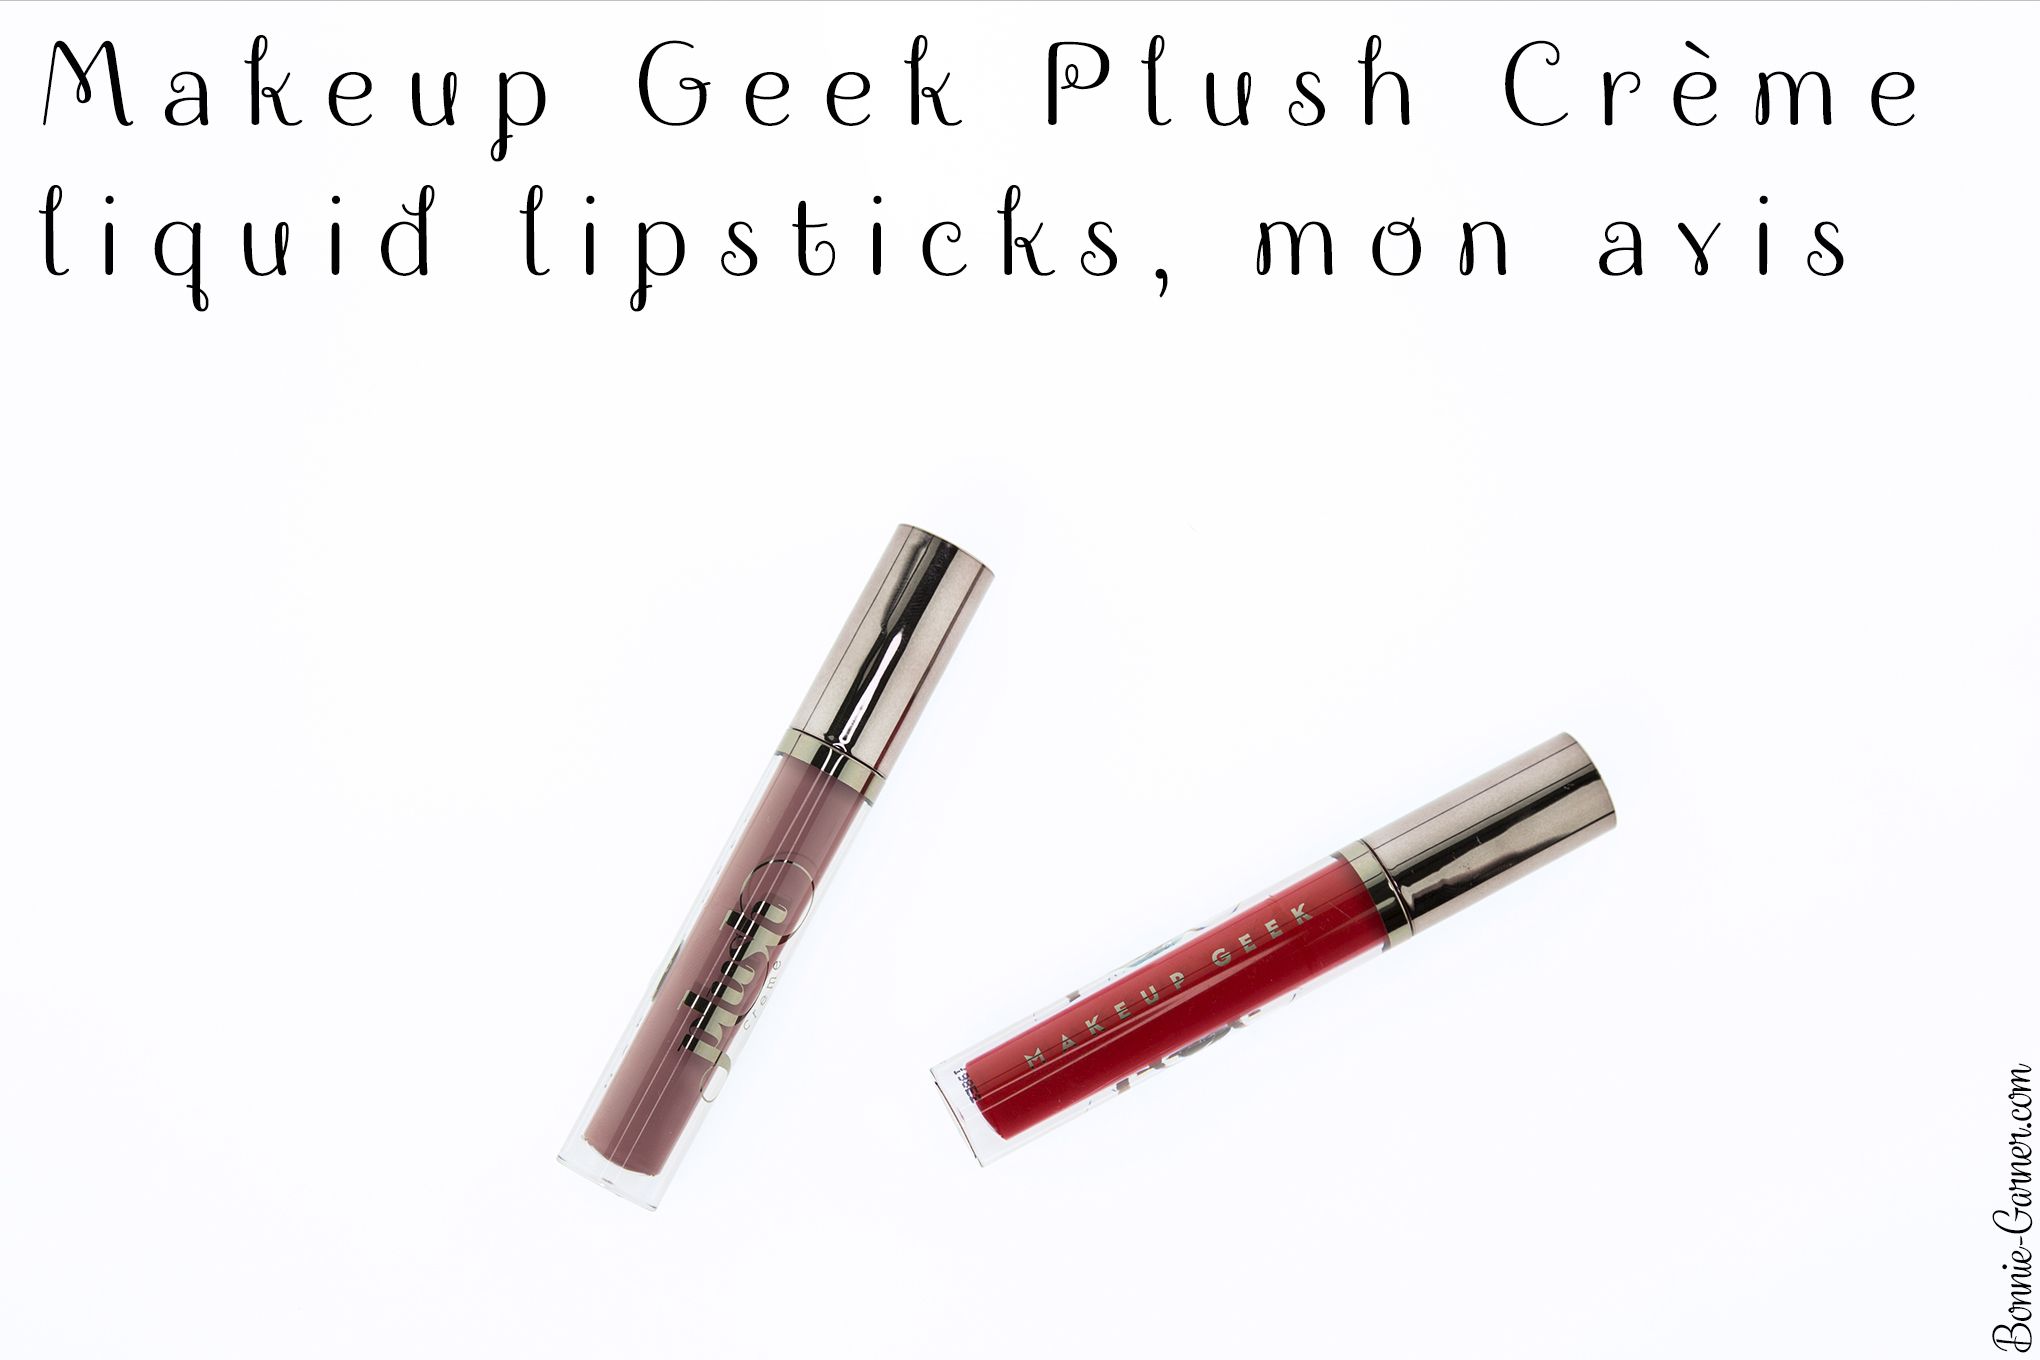 Makeup Geek Plush Crème liquid lipsticks, mon avis